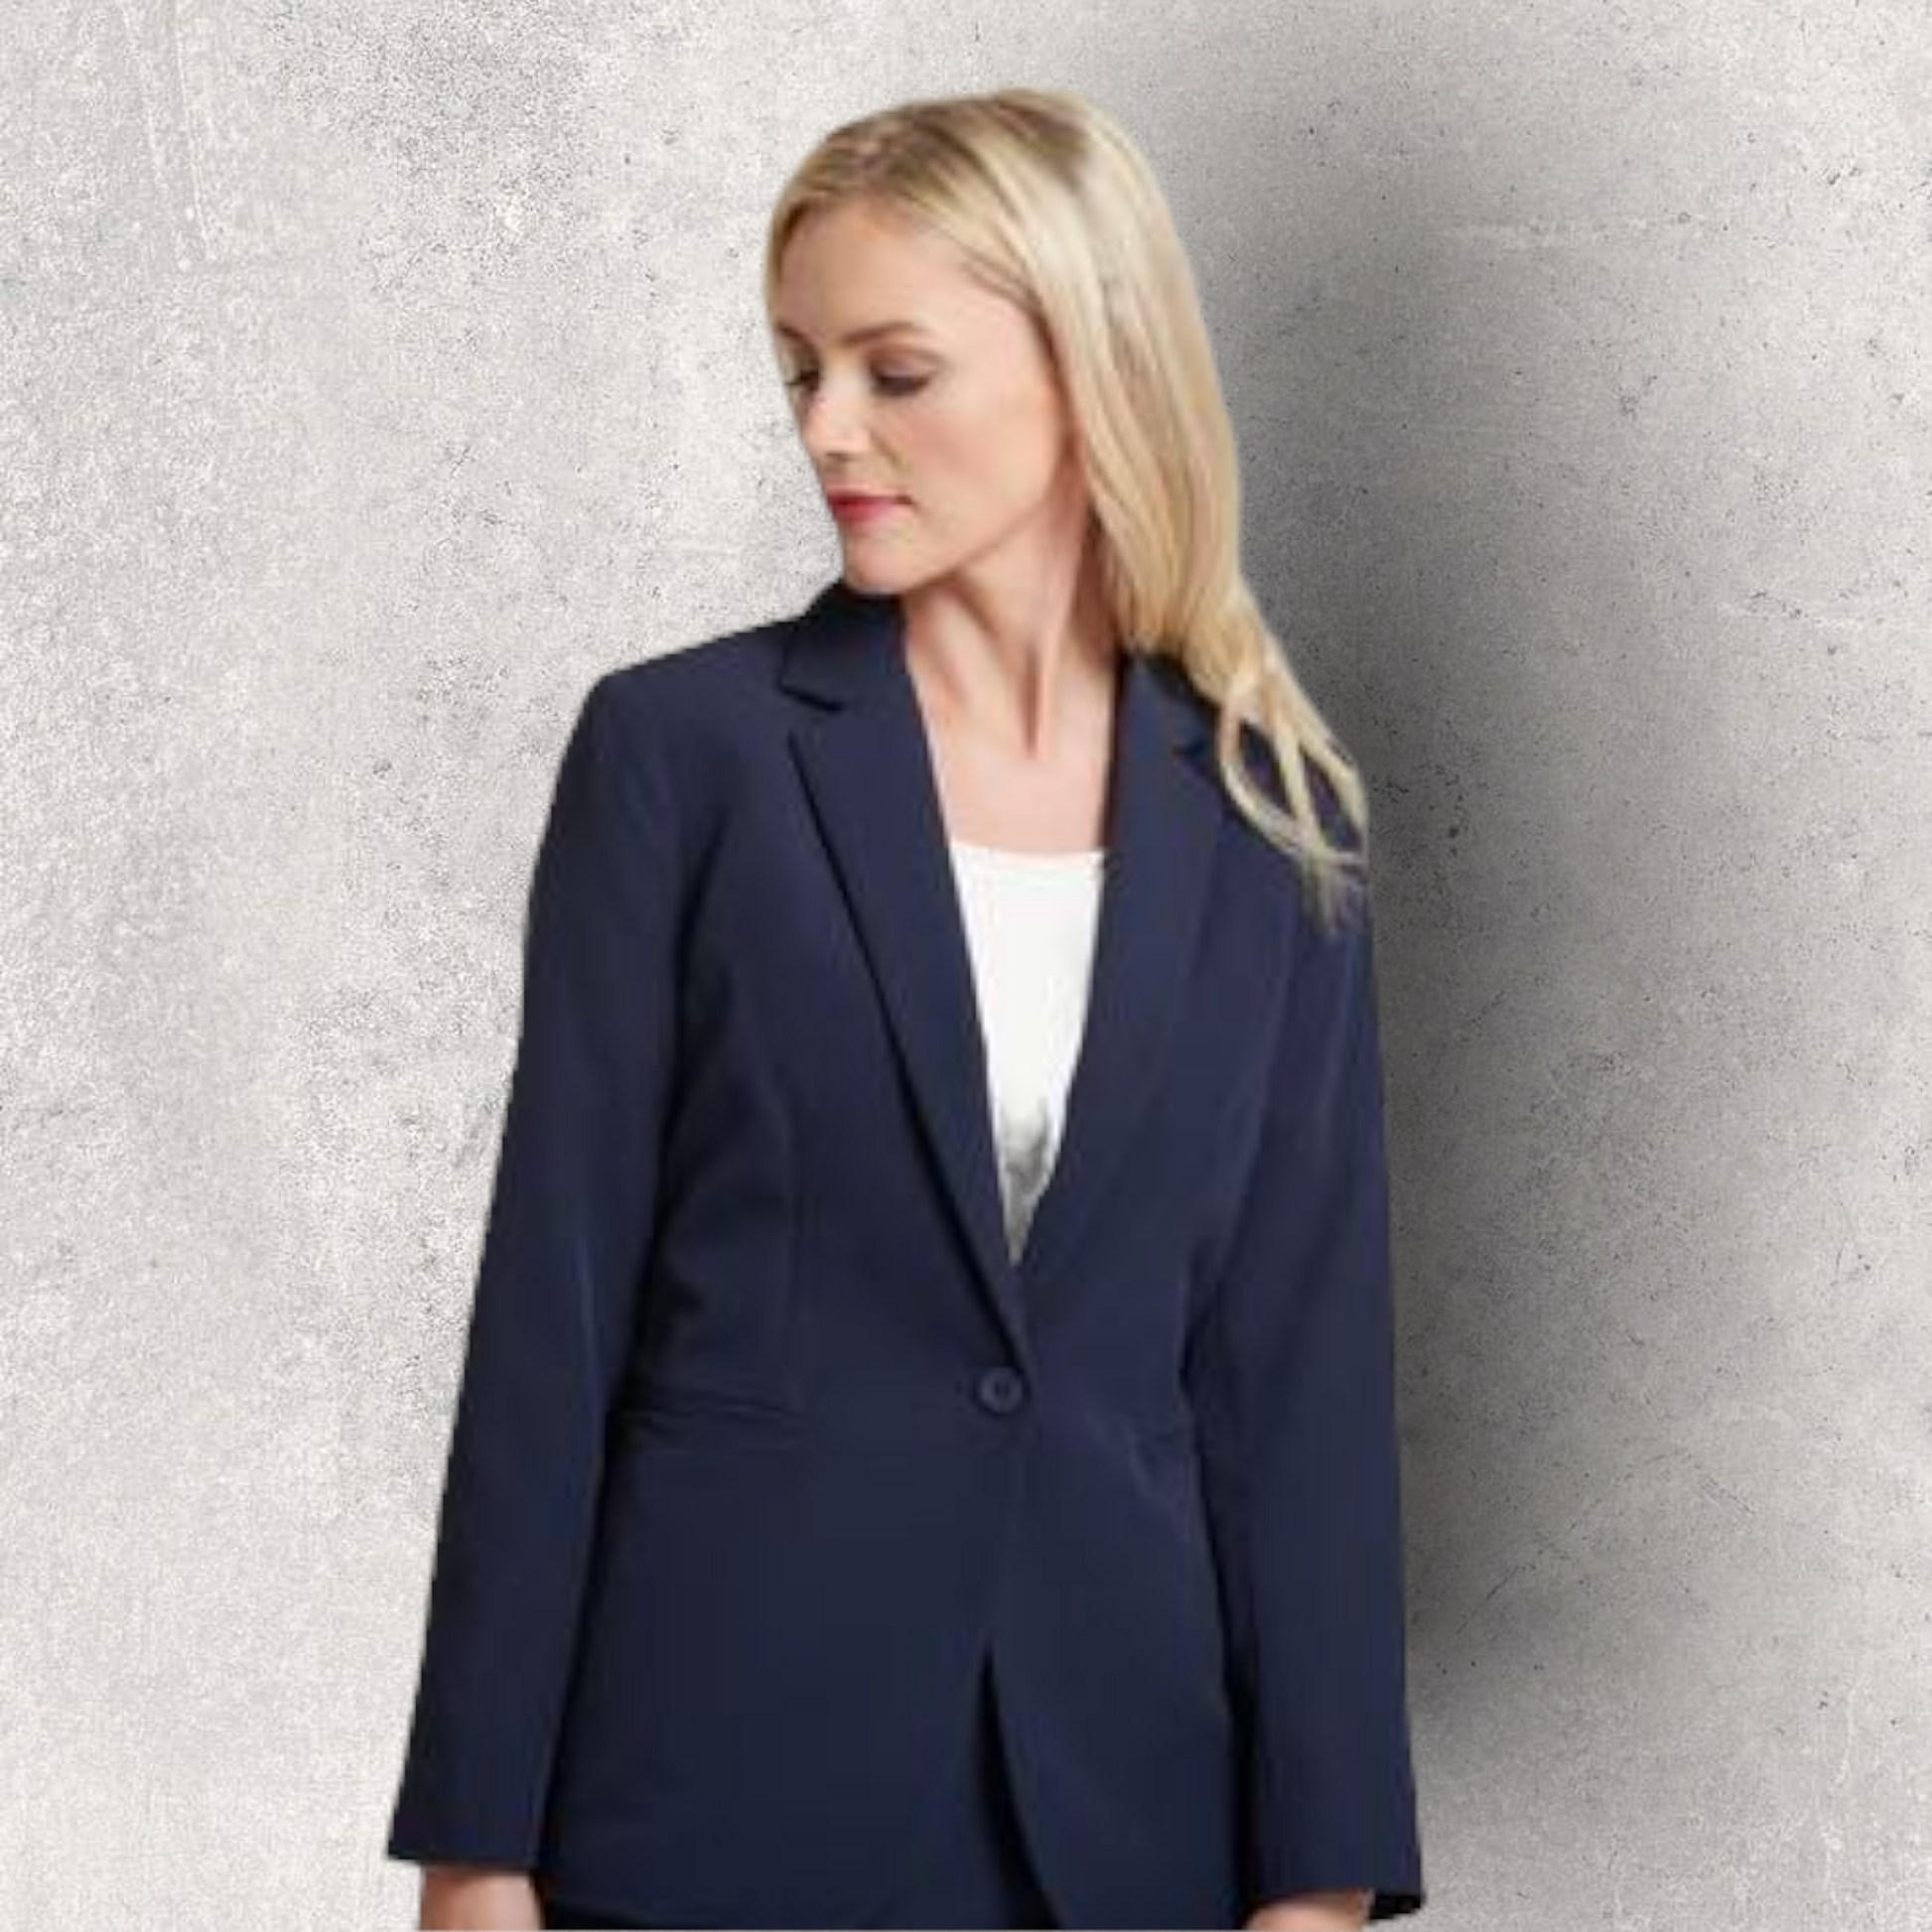 Libra Ladies Navy Blazer Jacket Business Office UK 10 US 6 EU 38 BNWT Timeless Fashions